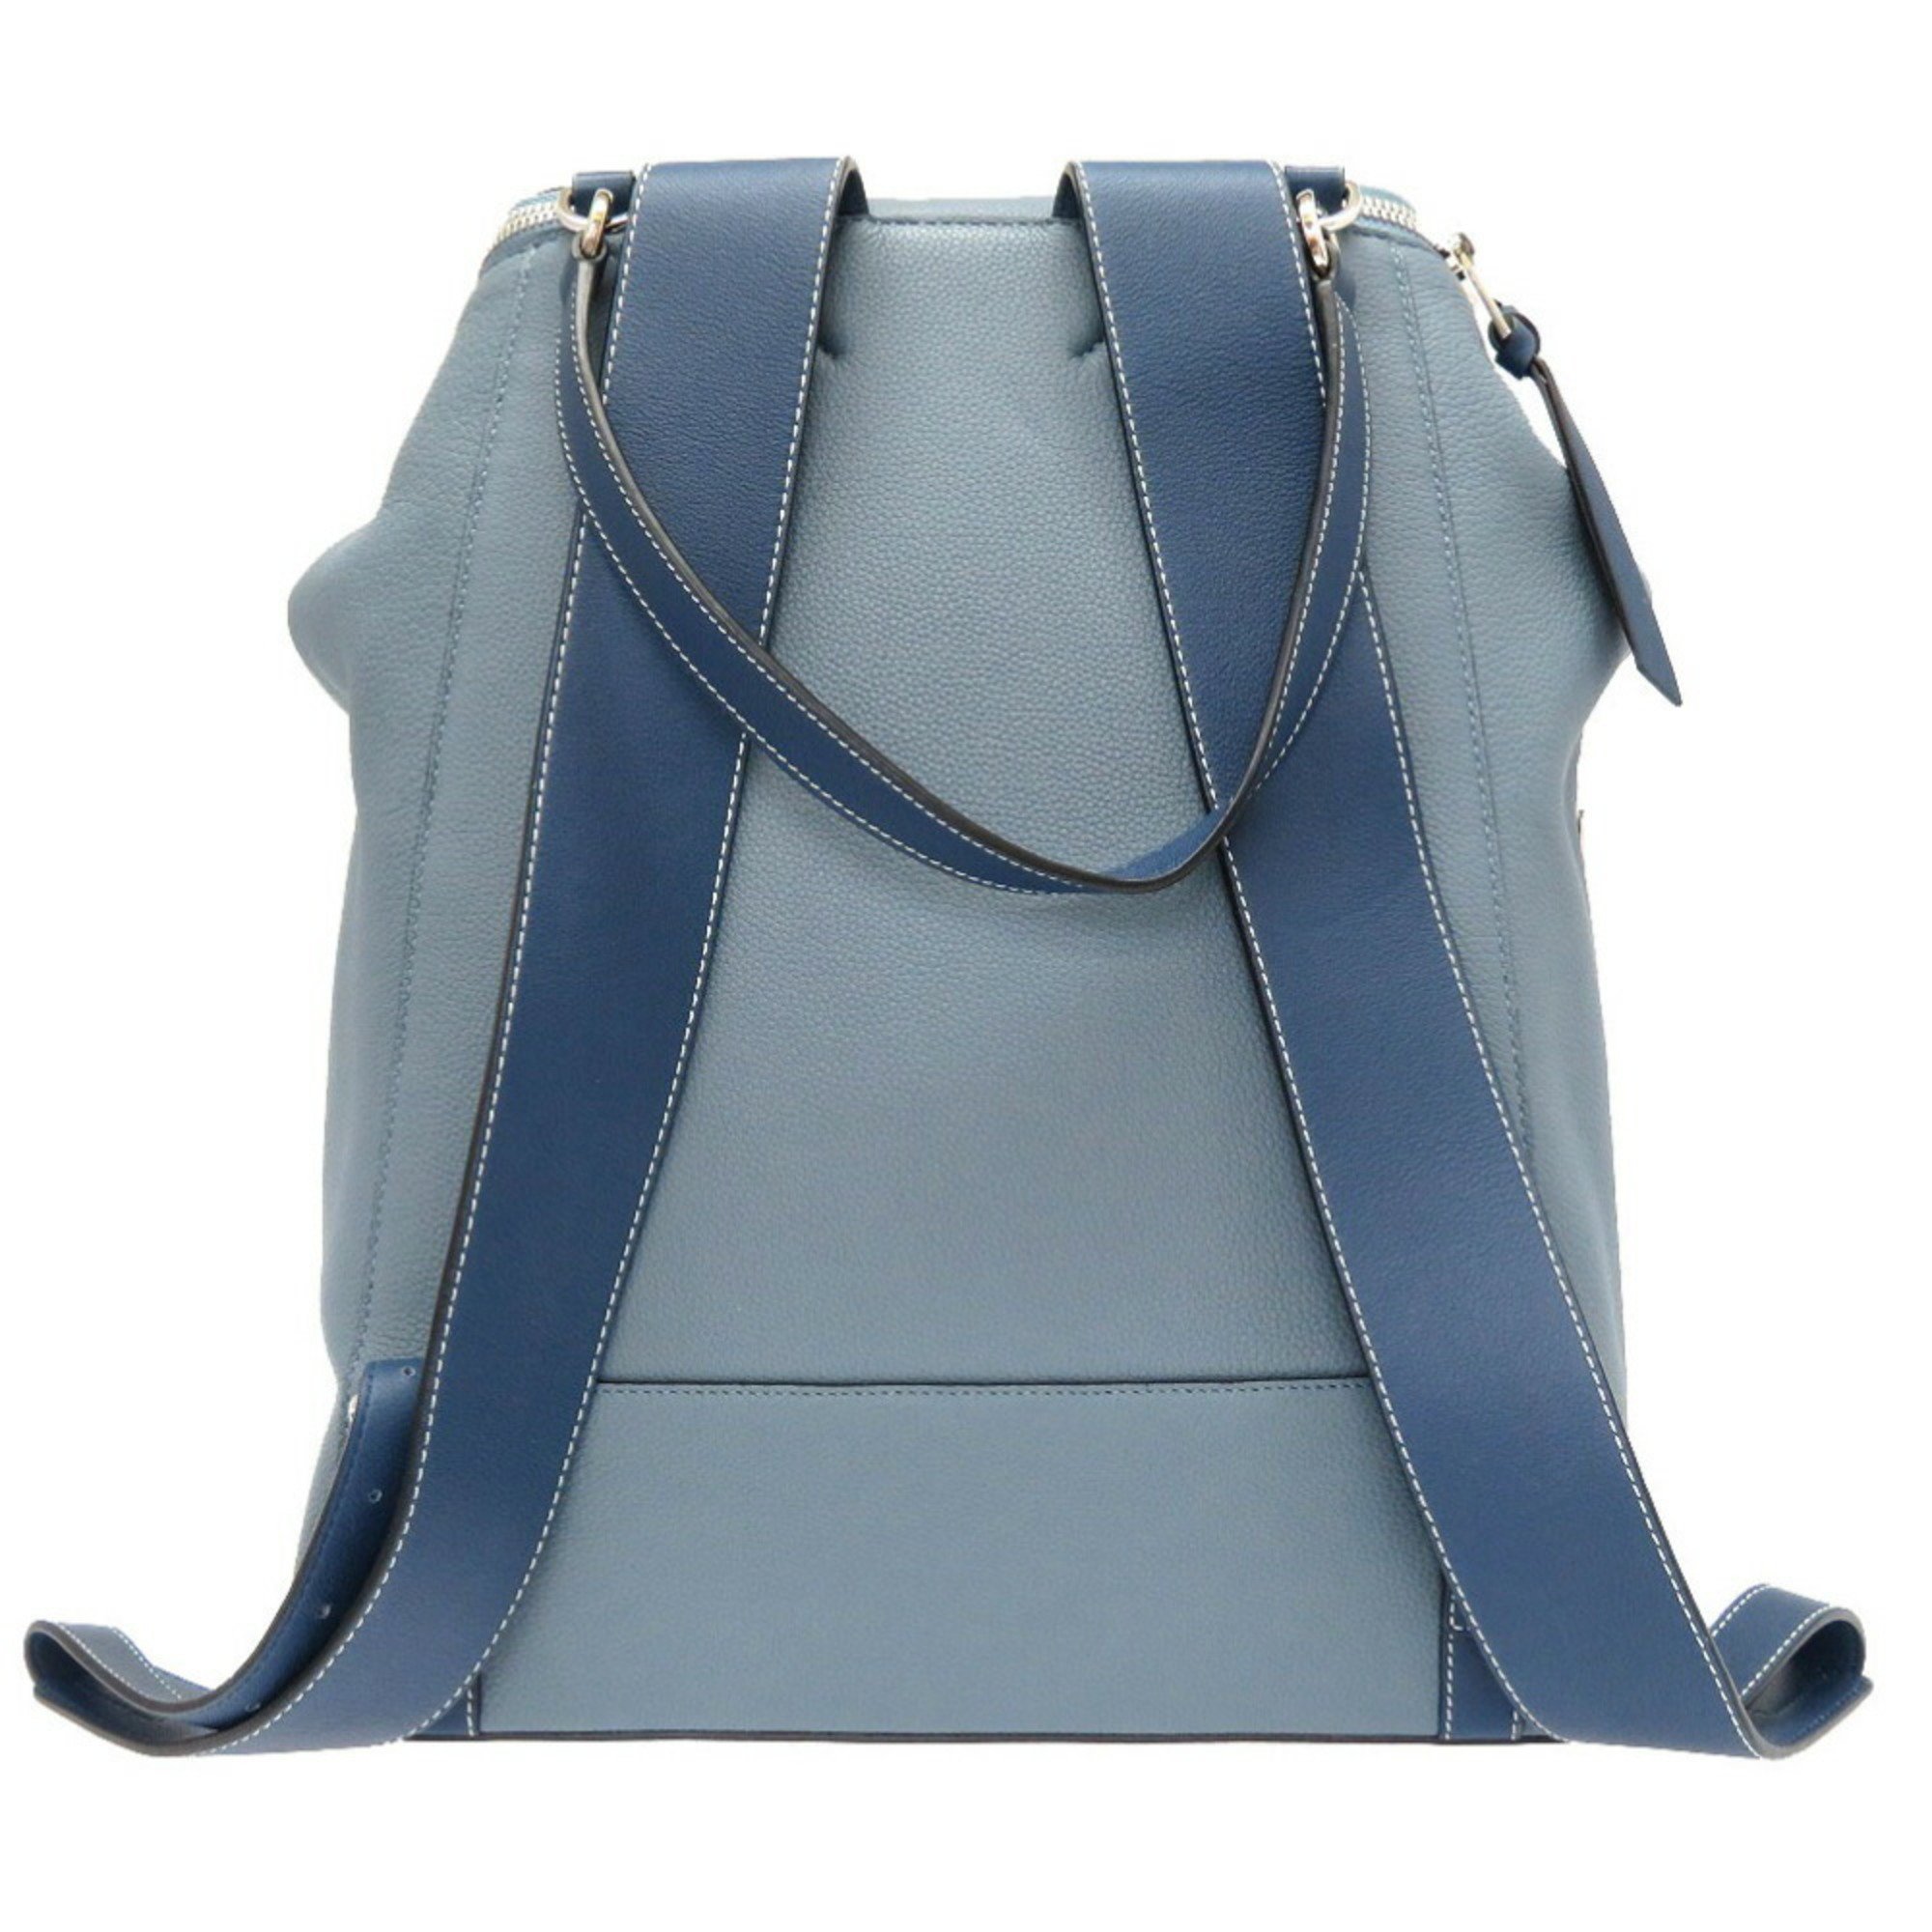 Loewe Dumbo Disney Capsule Collection Leather Blue Rucksack Backpack Limited 0004 LOEWE